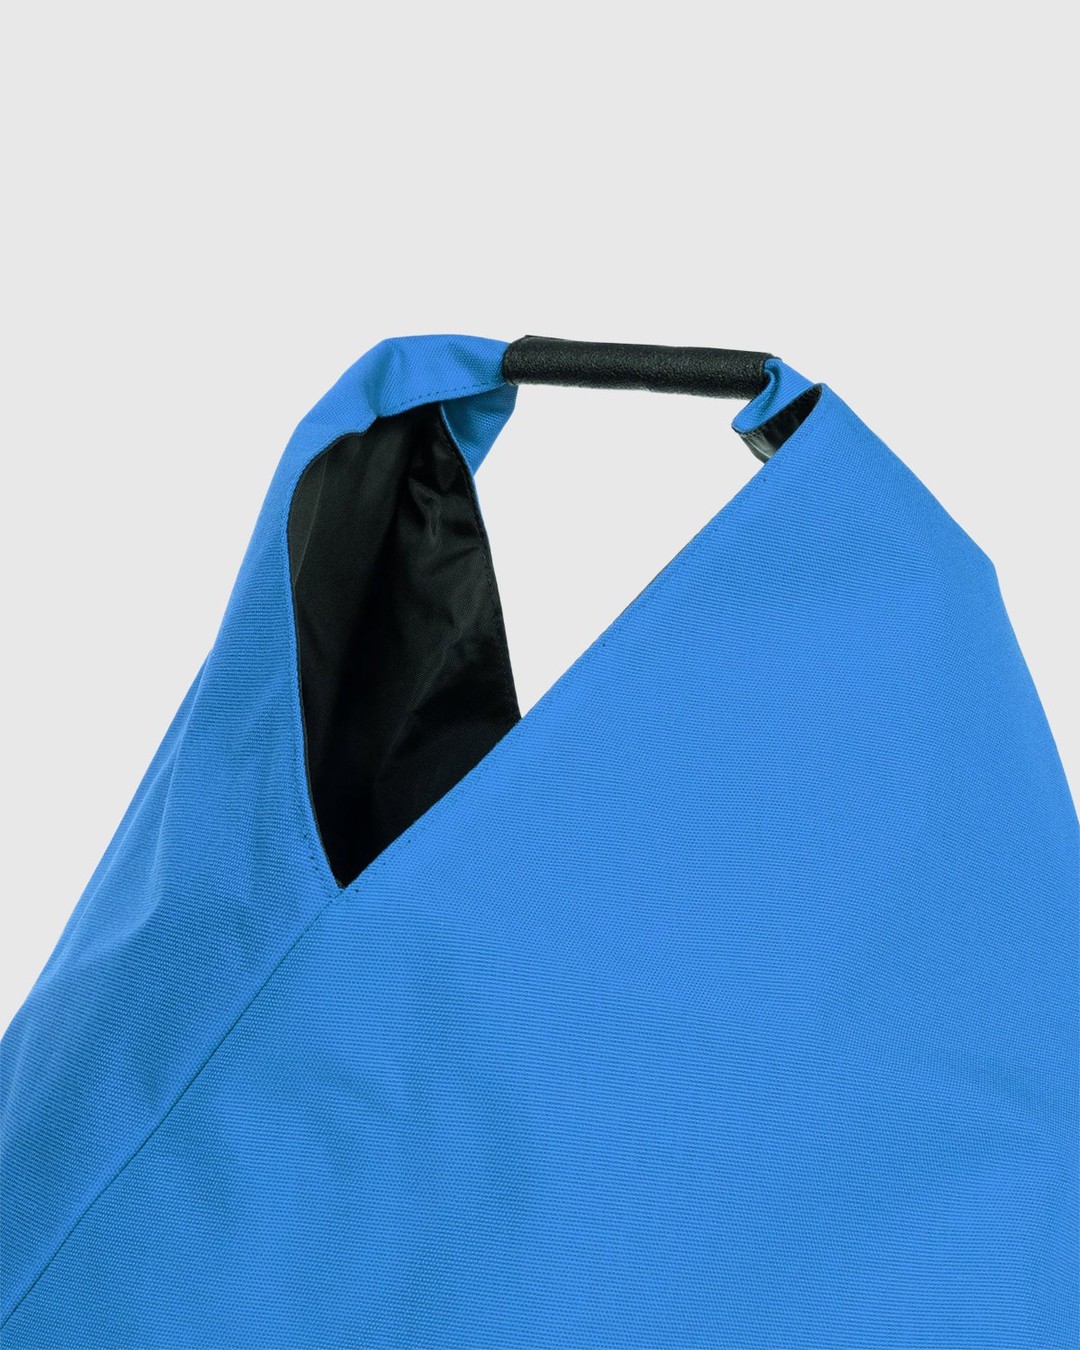 MM6 Maison Margiela x Eastpak – Shopping Bag Dazzling Blue - Bags - Blue - Image 4